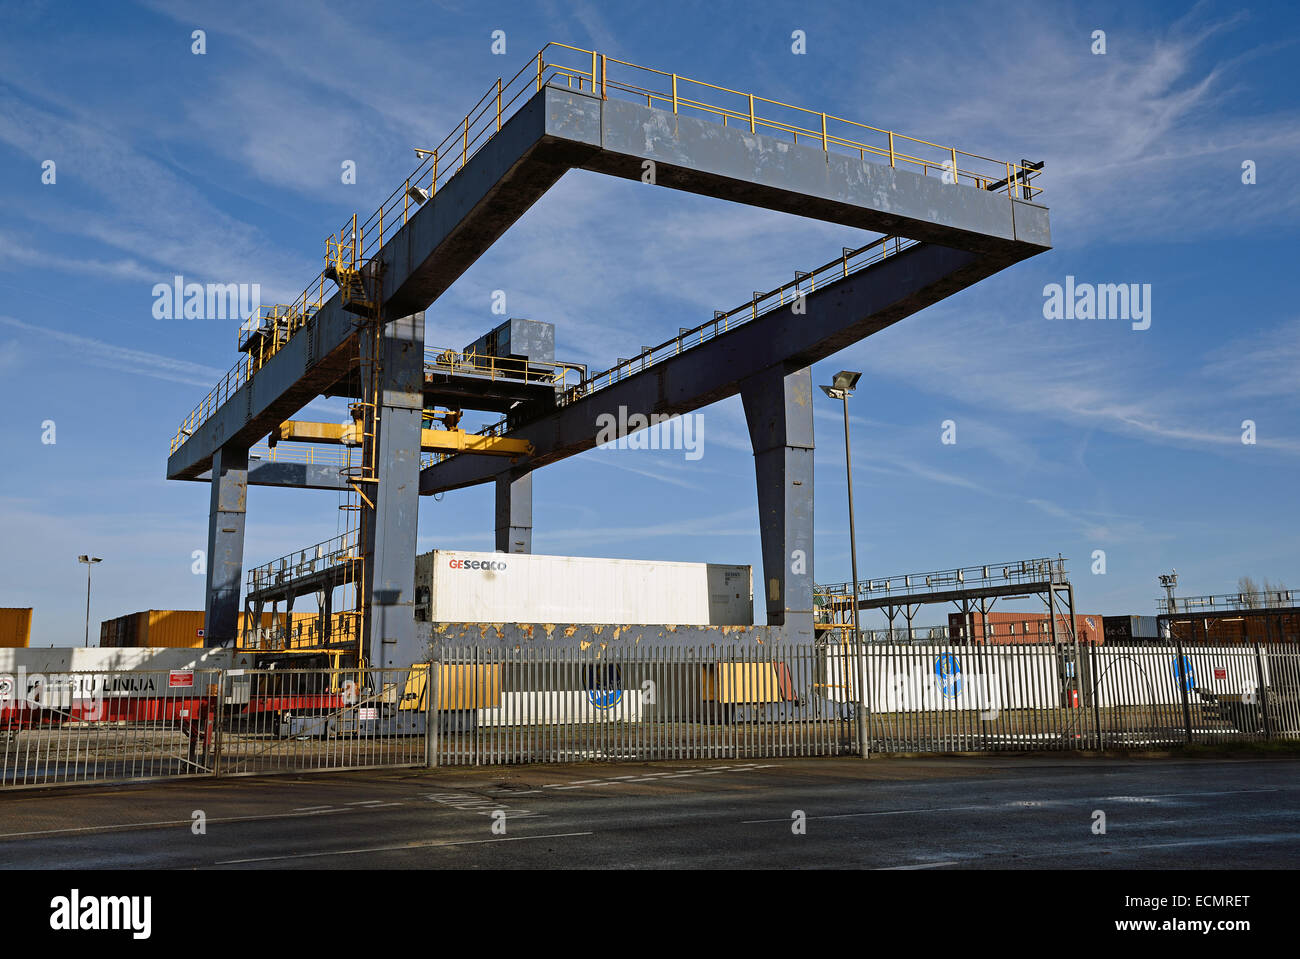 Straddle carrier operating at Peel Ports Medway, Sheerness Docks, Sheppey, Kent, UK Stock Photo